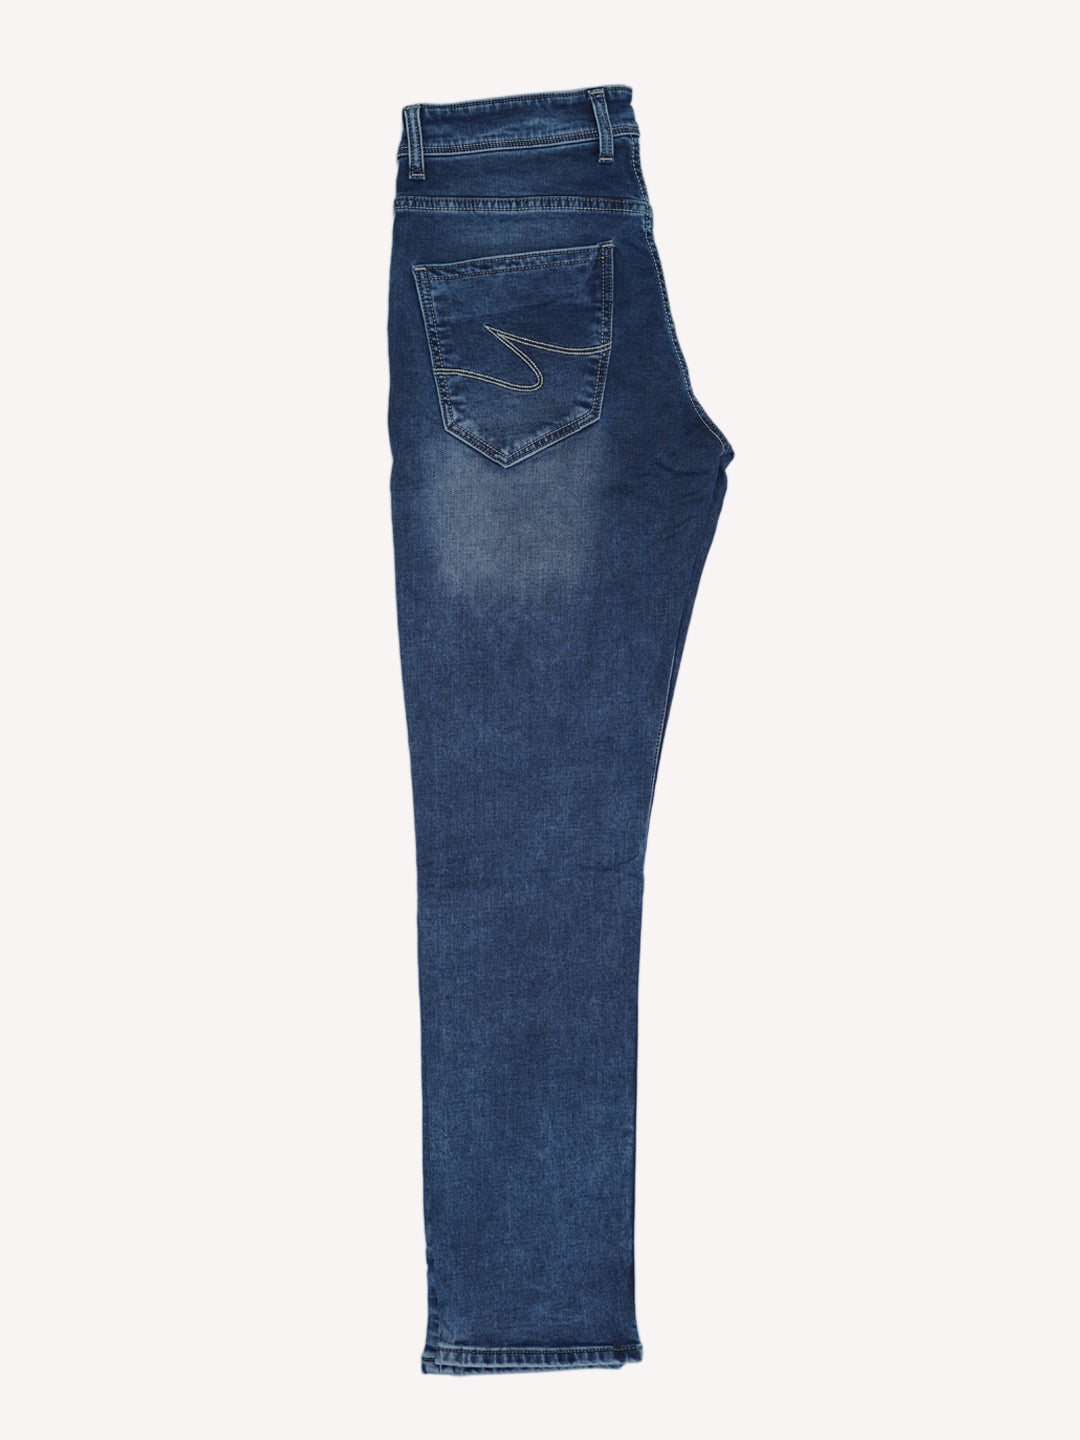 mens-deep-blue-jeans